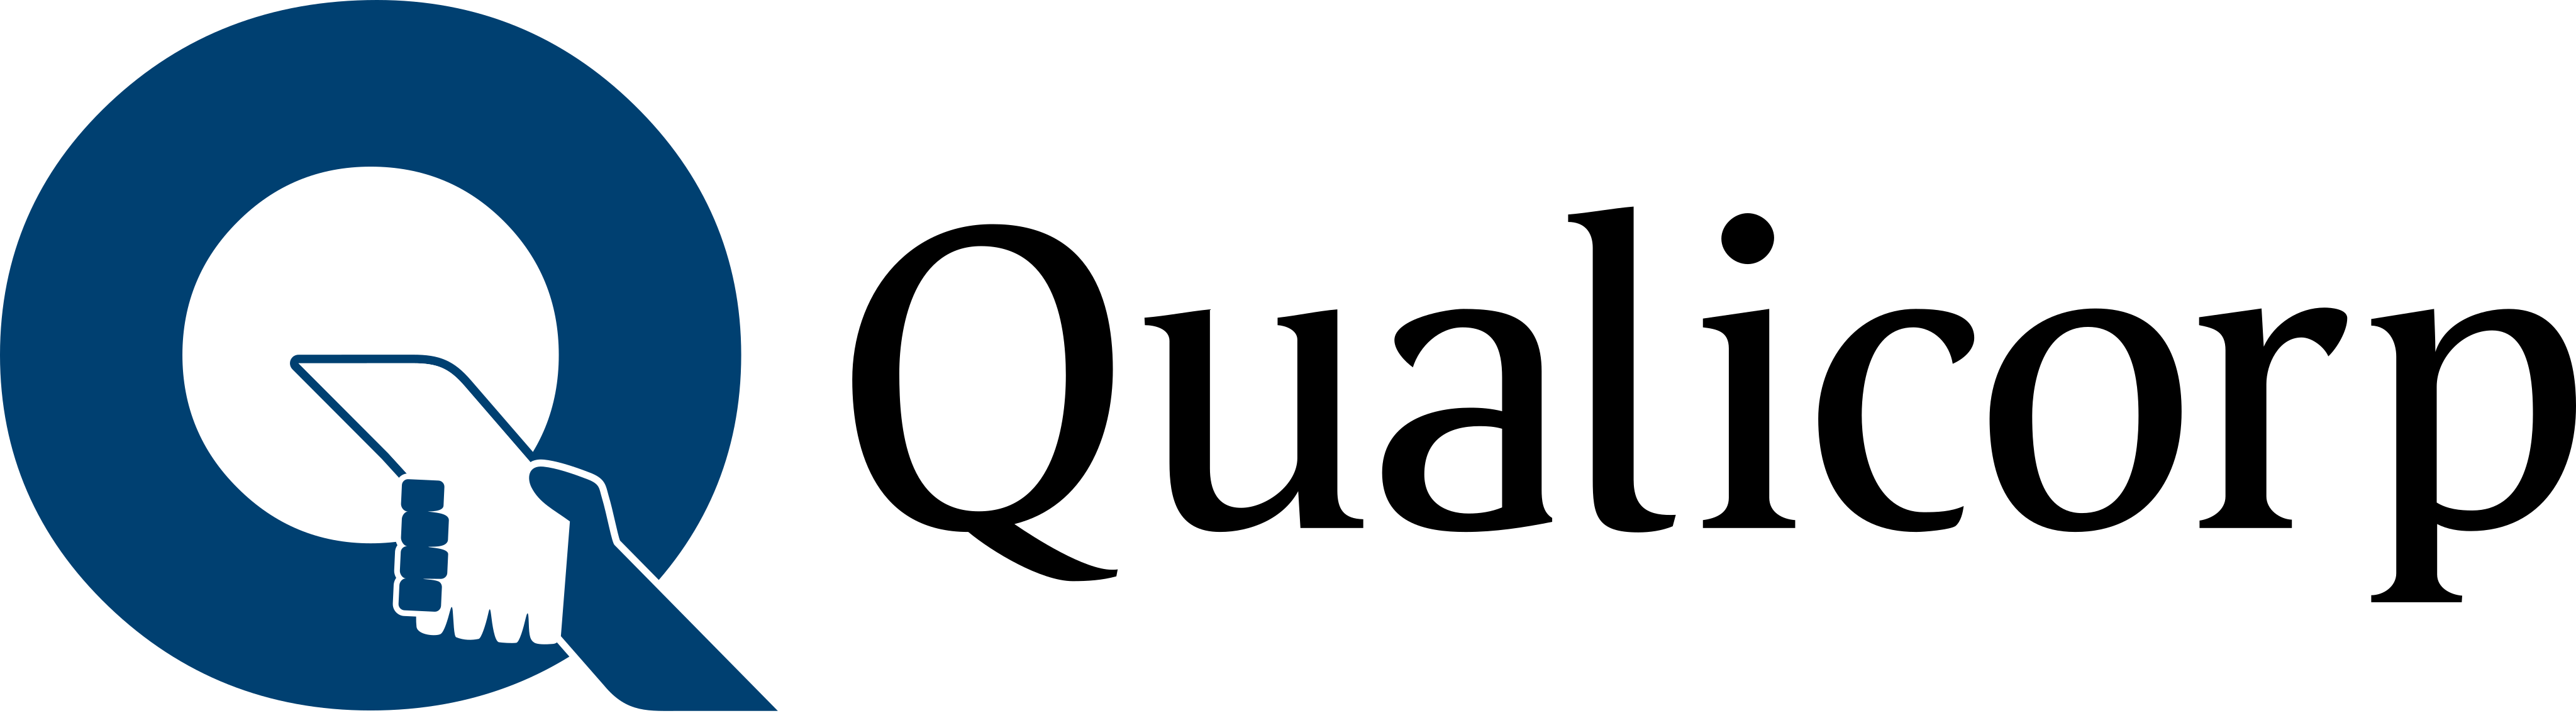 Qualicorp Logo.